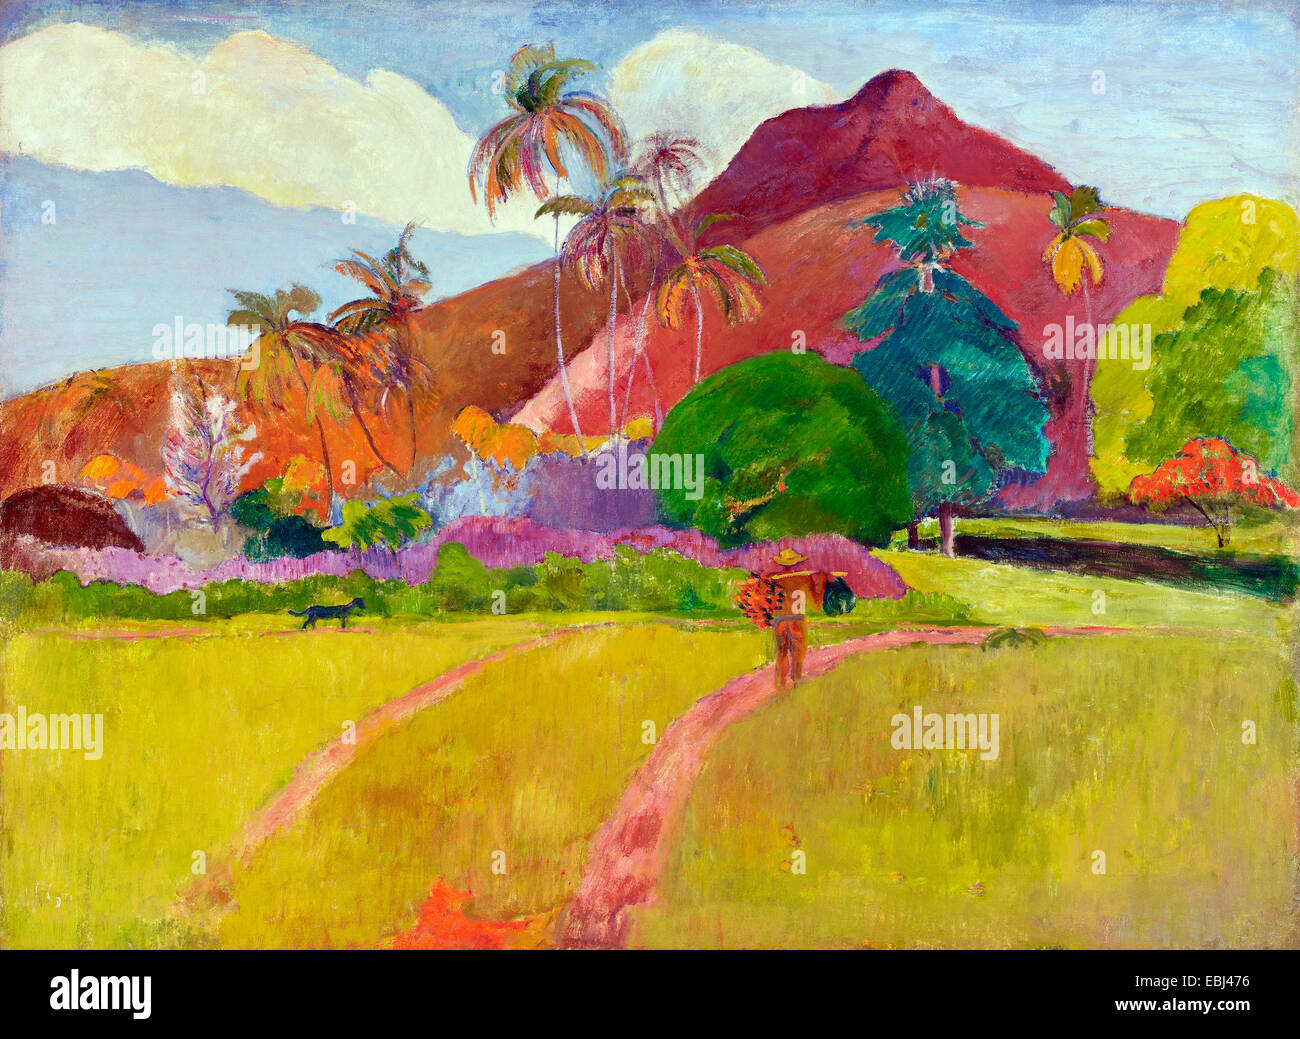 Paul Gauguin, Tahitian Landscape 1891 Oil on canvas. Minneapolis Institute of Arts, Minnesota, USA. Stock Photo